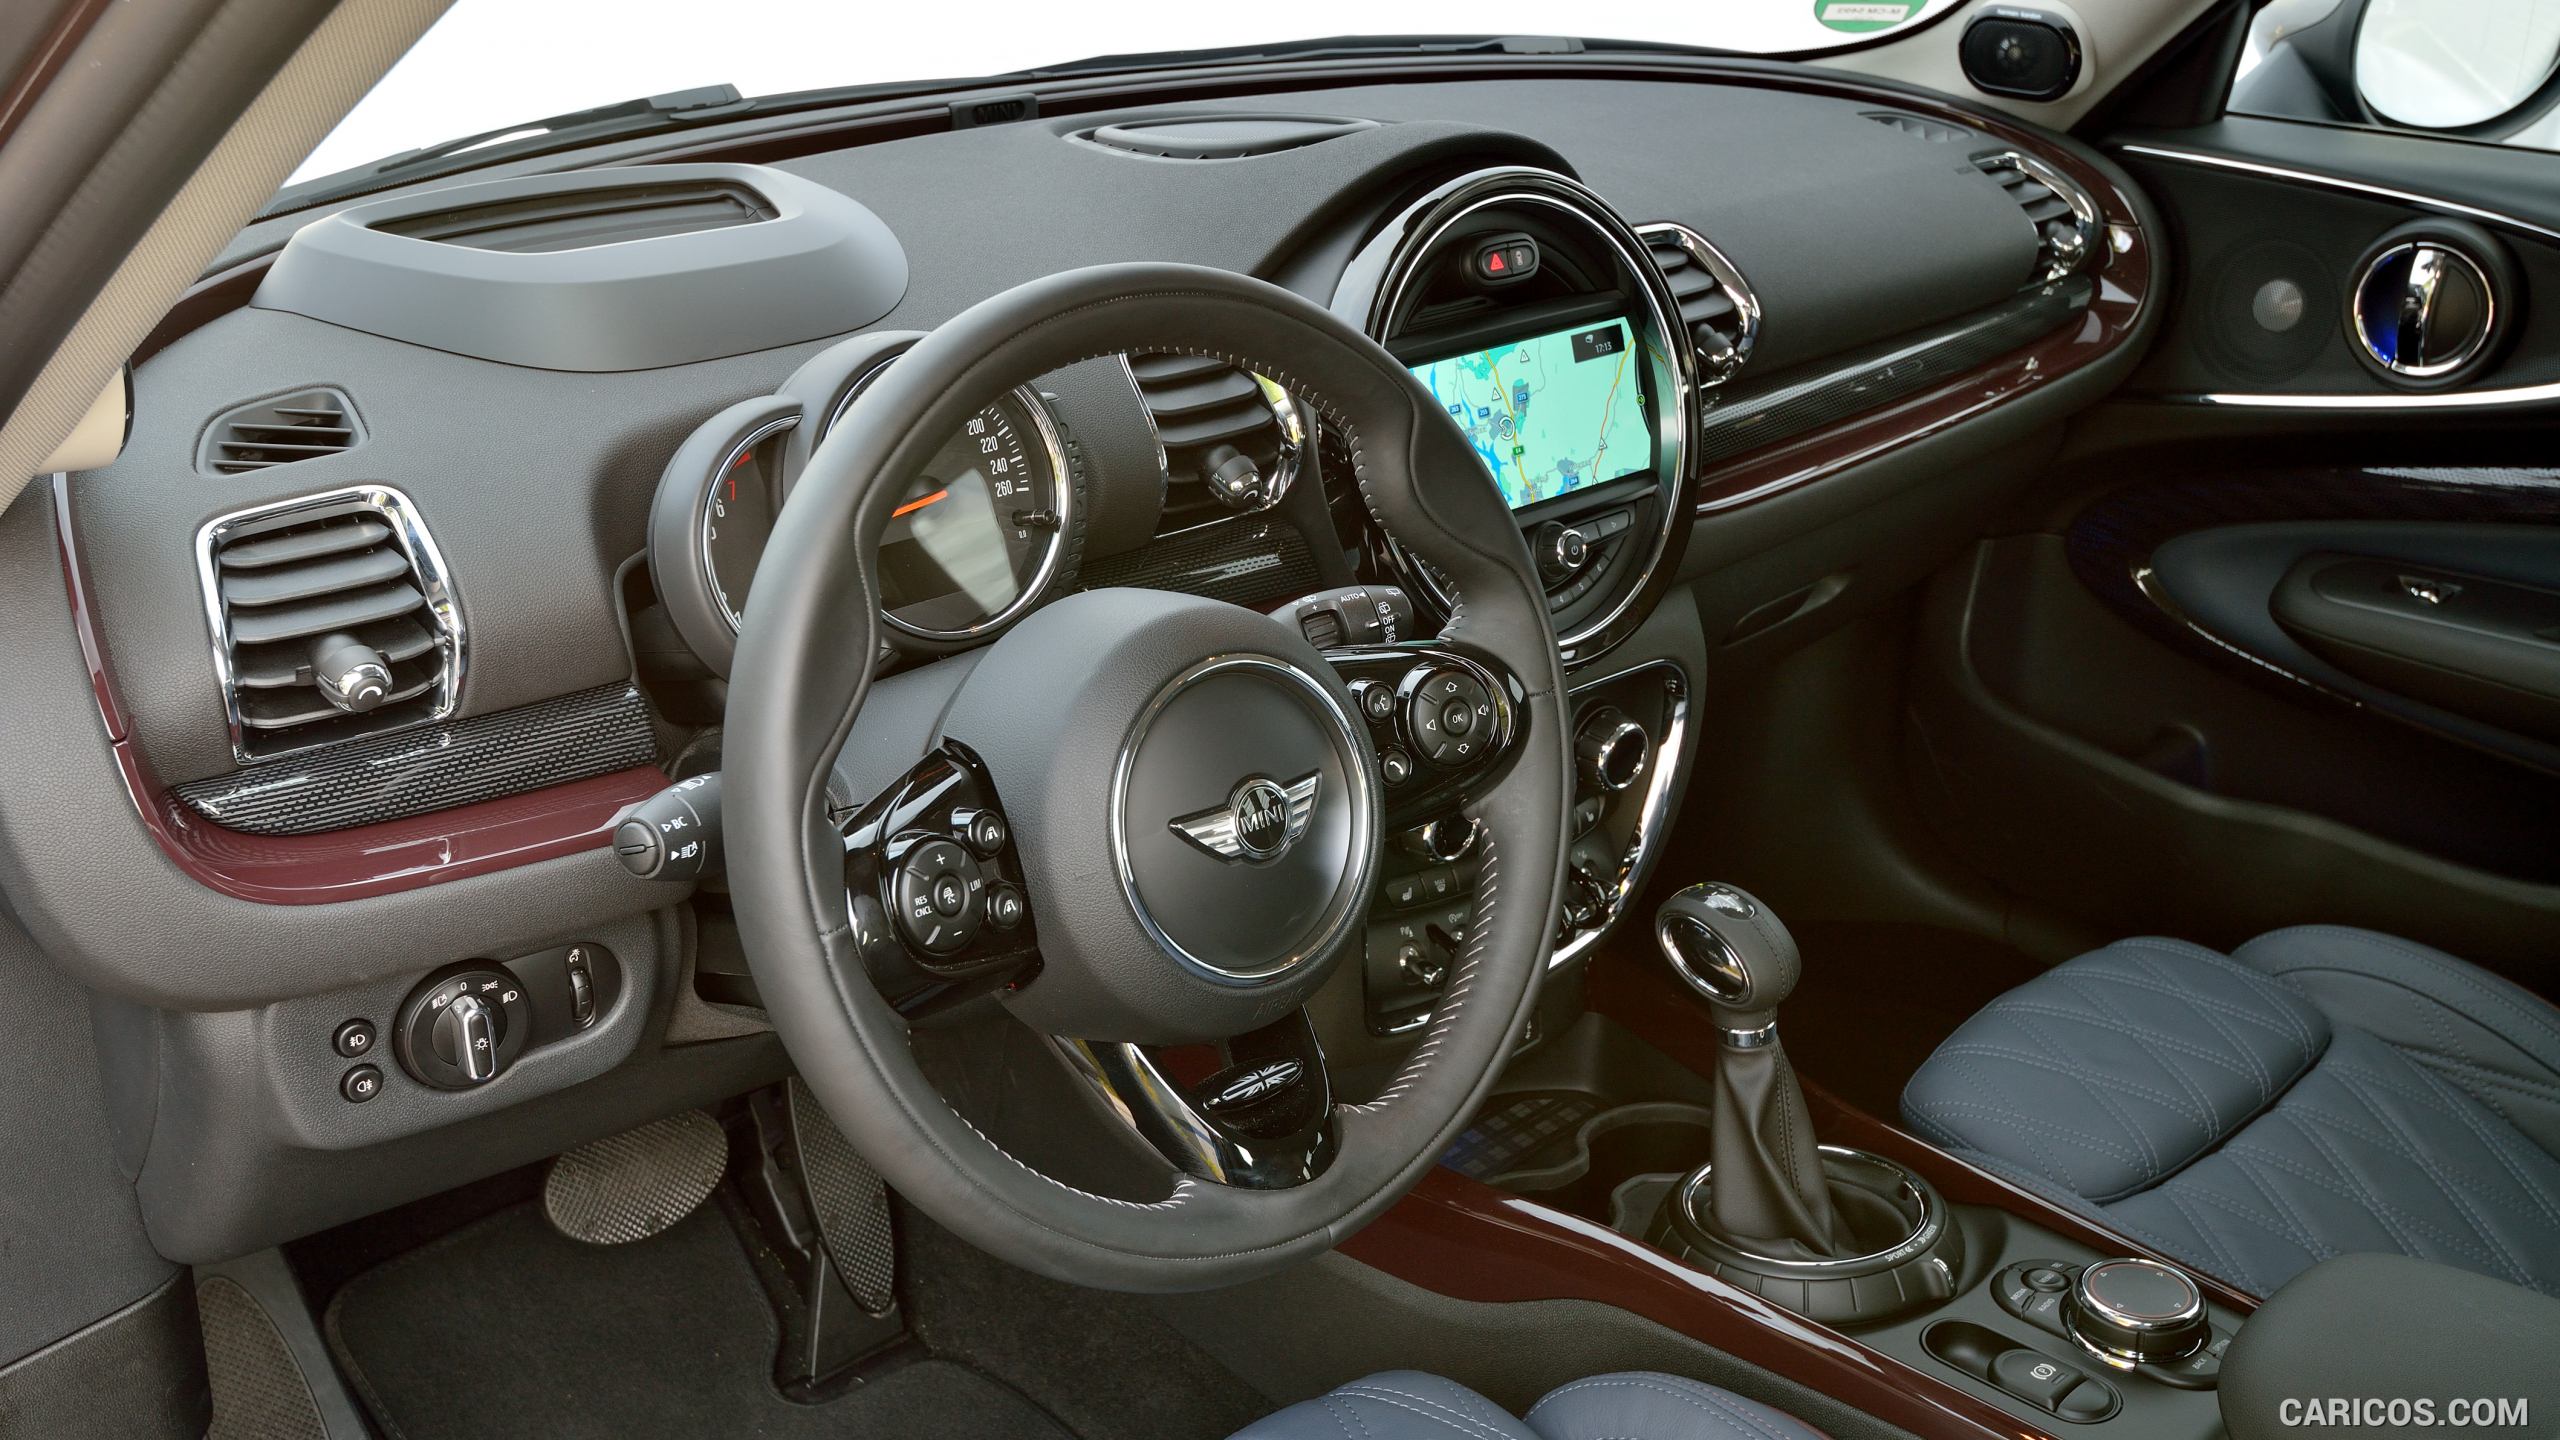 2016 MINI Cooper S Clubman in Metallic Pure Burgundy - Interior, Cockpit, #358 of 380